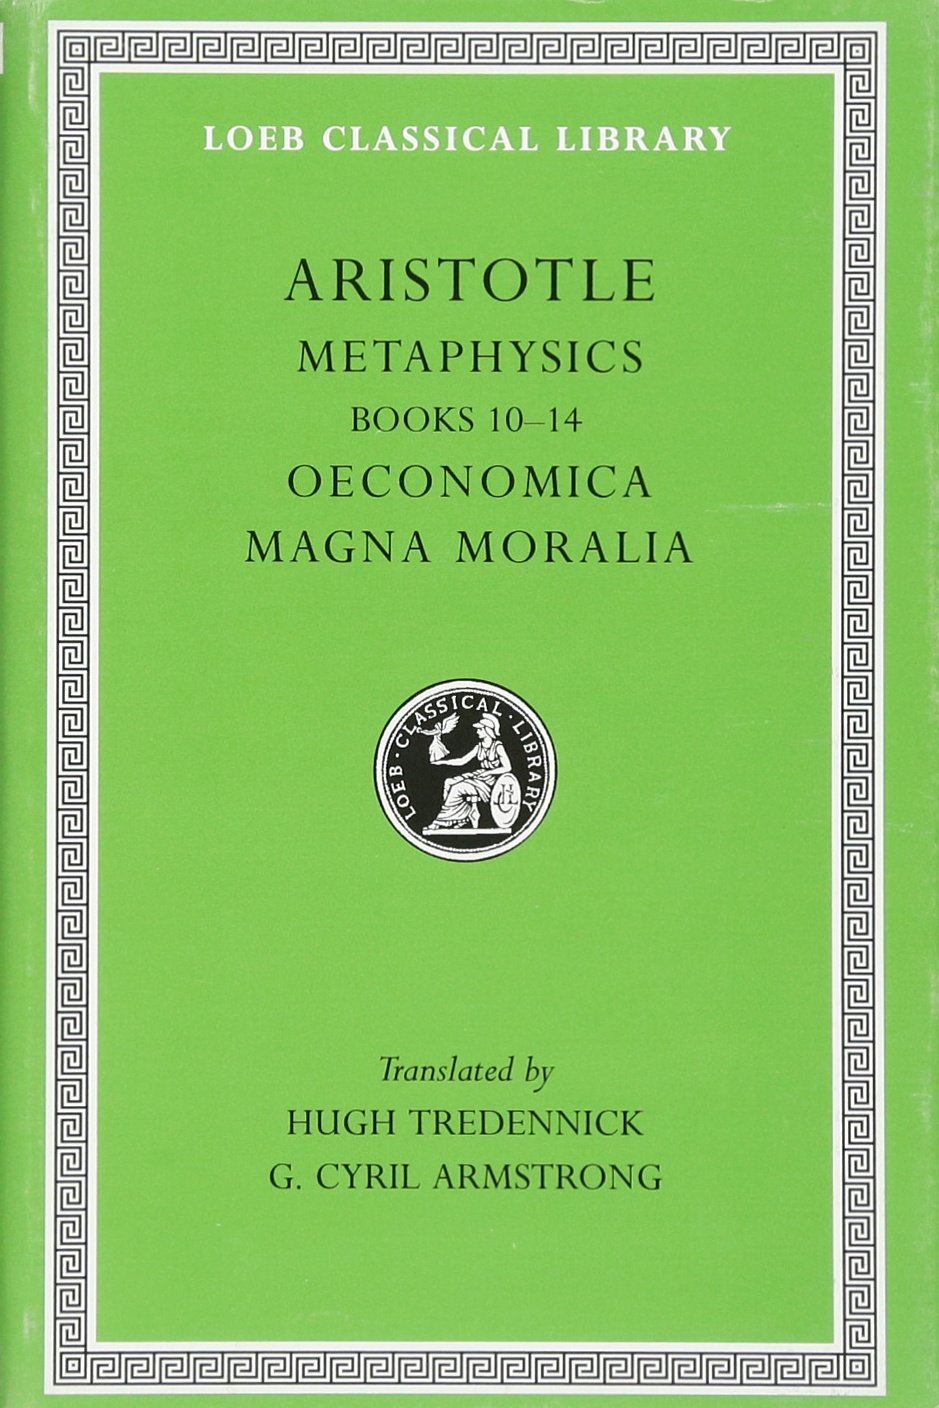 metaphysics according to aristotle